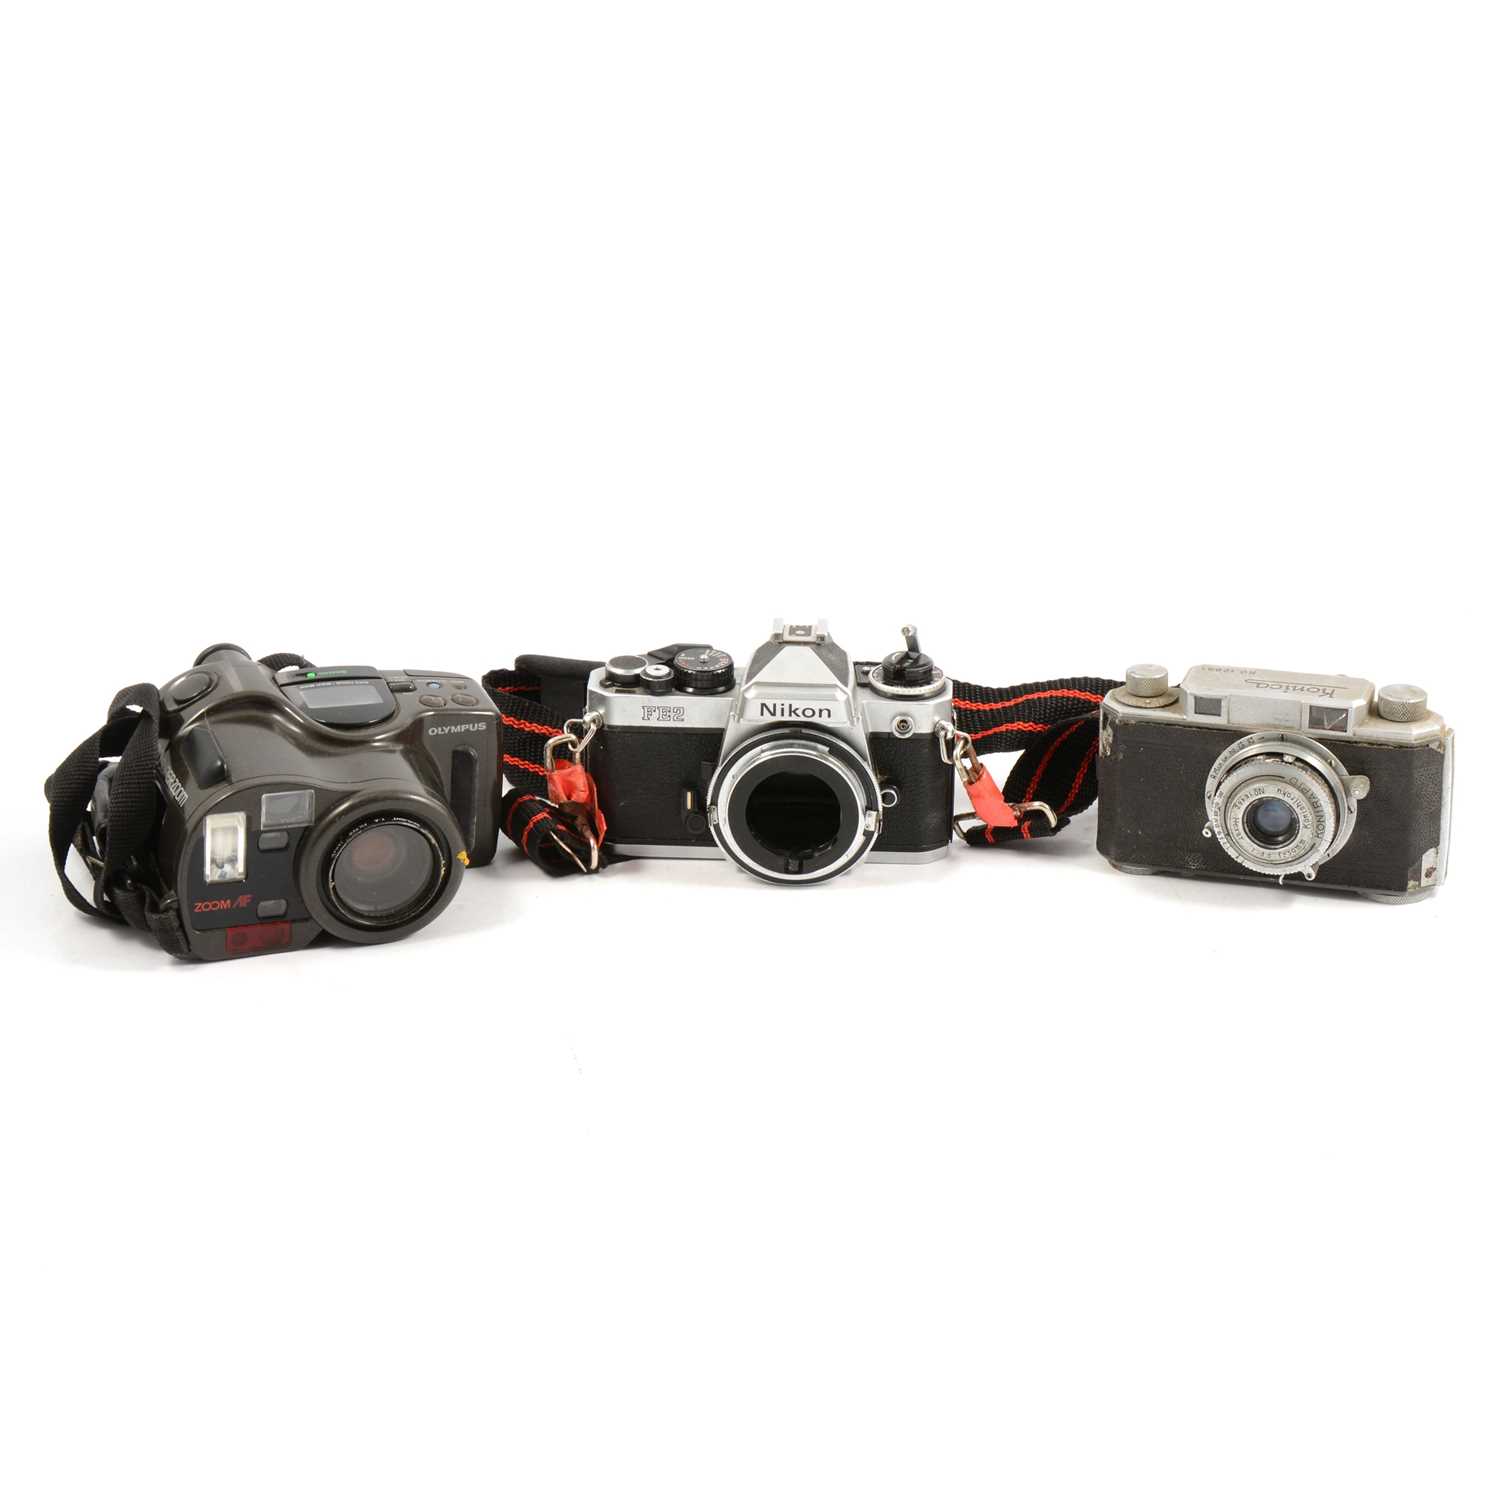 Lot 122 - Vintage cameras and binoculars, one box including a Nikon FE2 SLR body